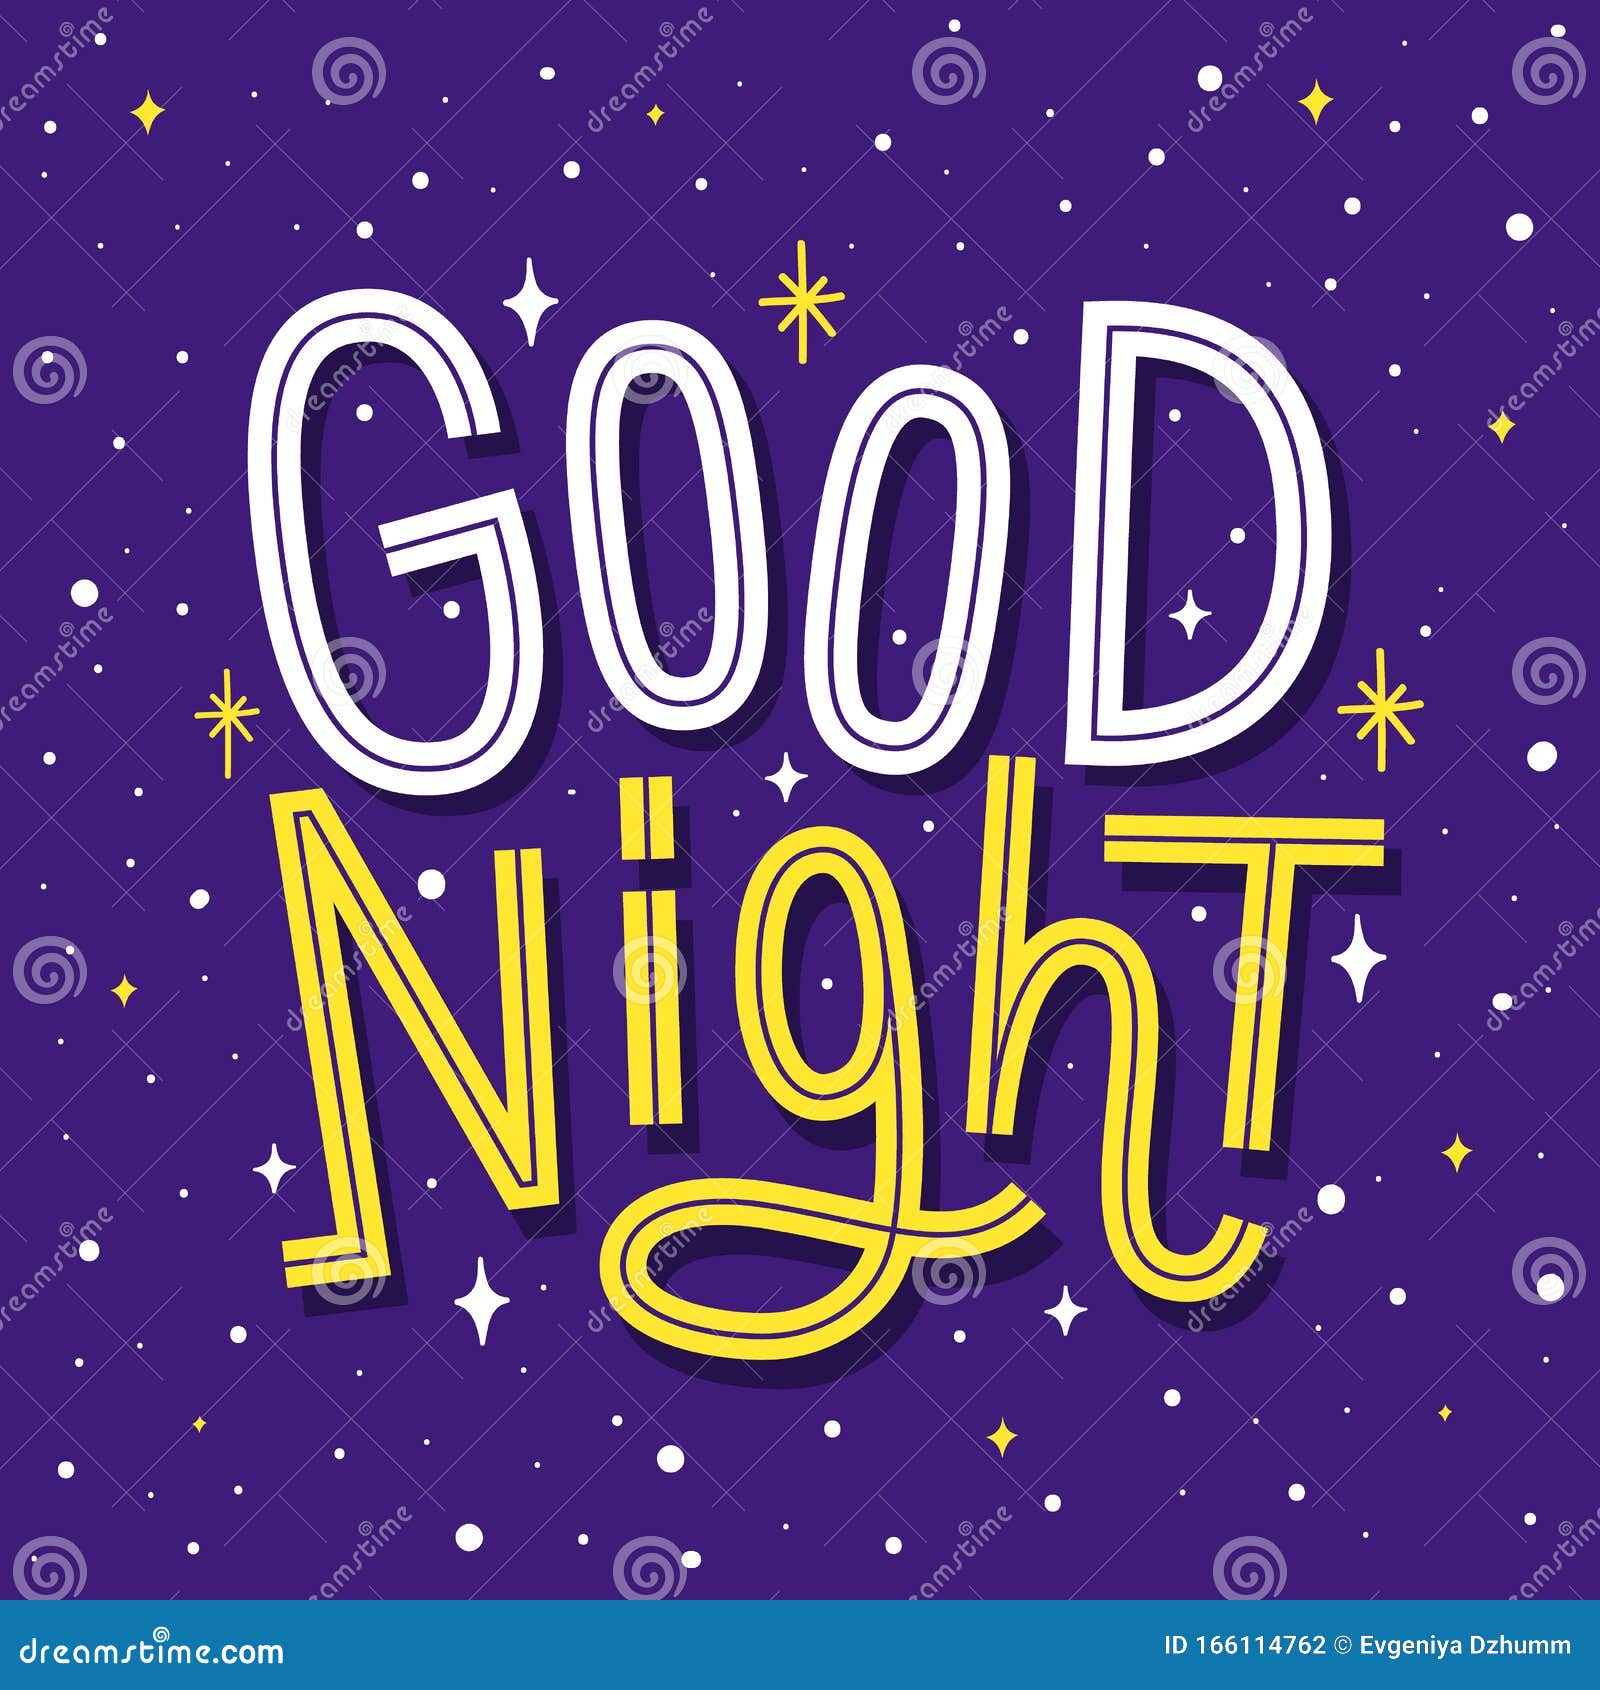 Good Night Phrase on the Night Sky with Stars. Funny Inscription in  Childish Cartoon Style. Stock Vector - Illustration of dream, night:  166114762